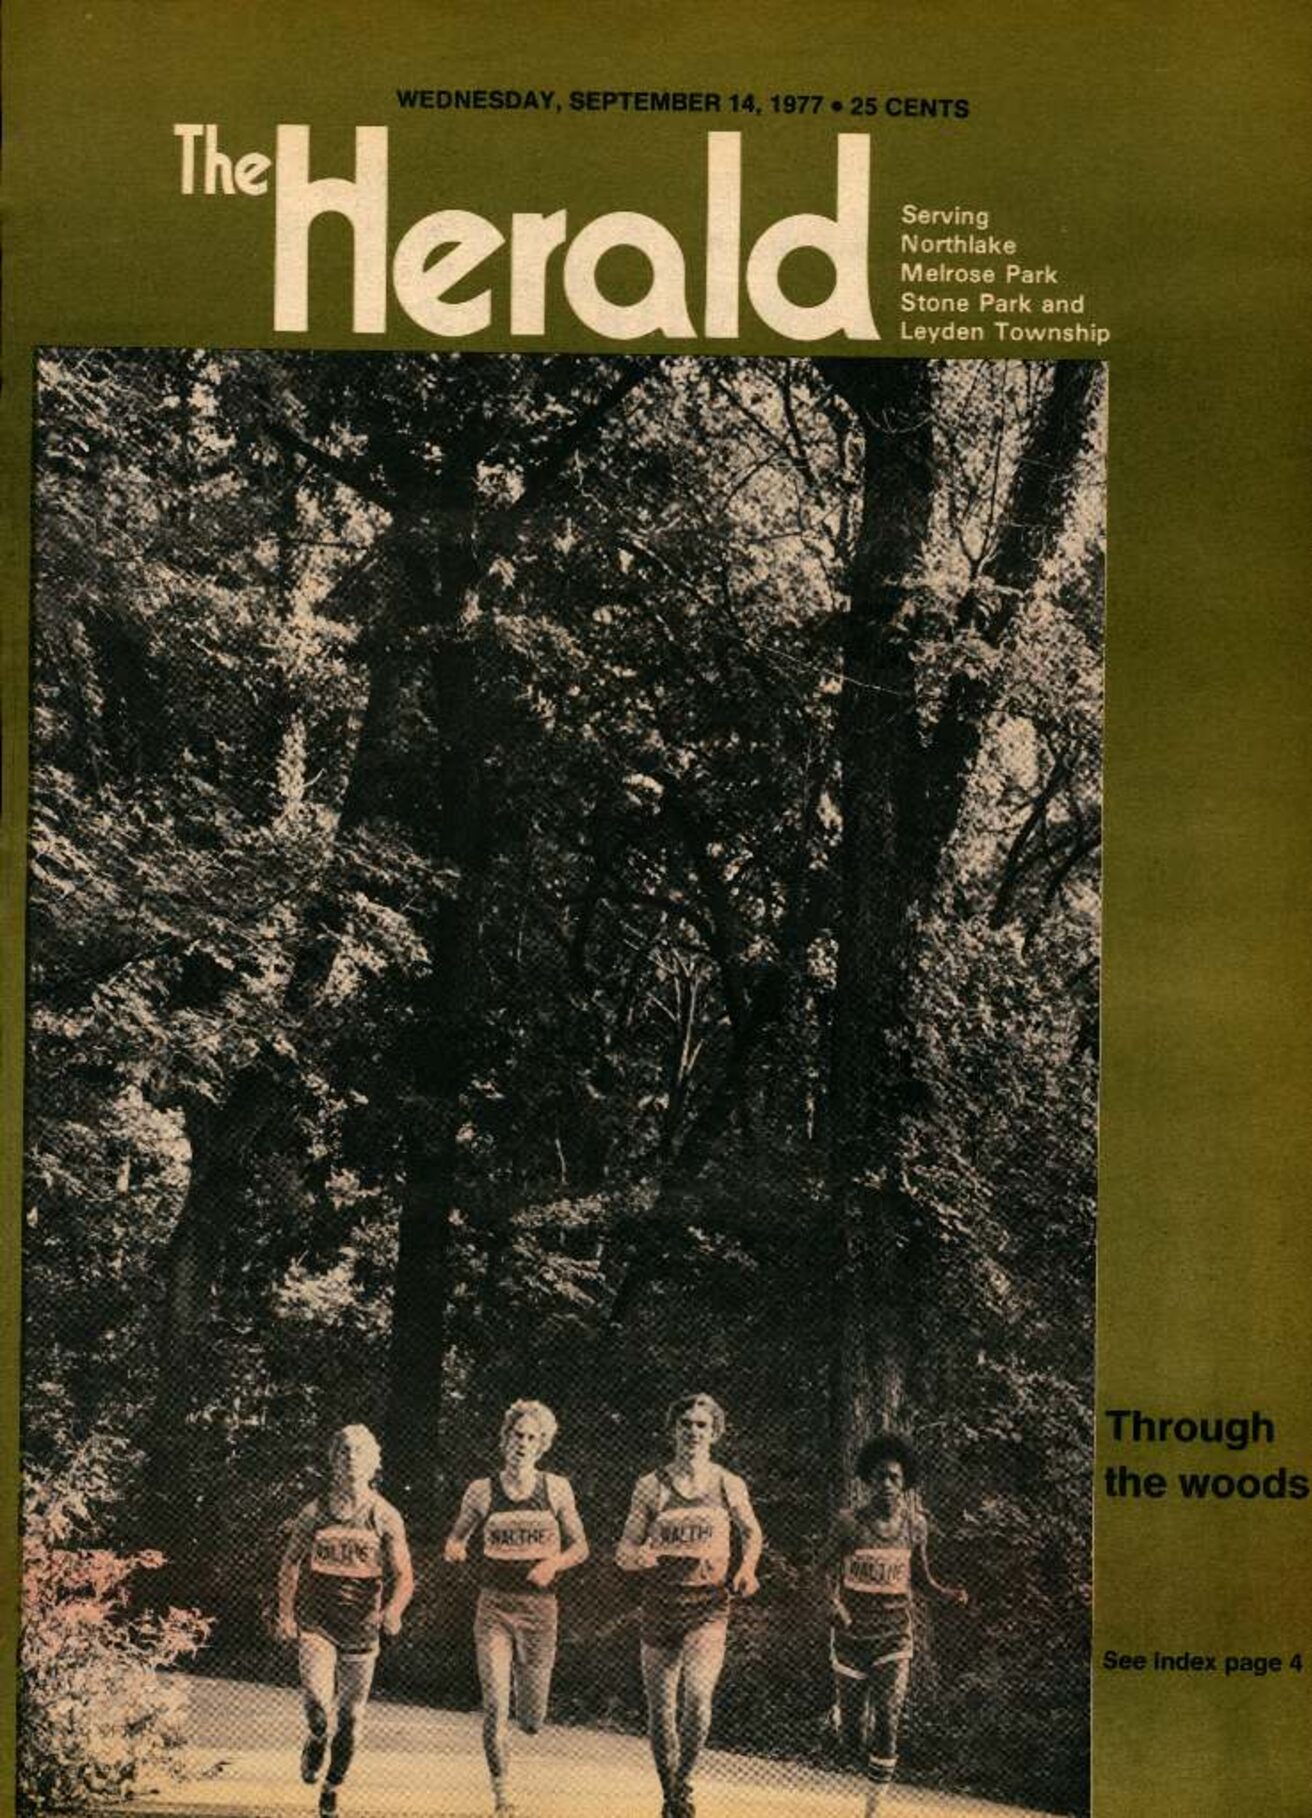 The Herald – 19770914